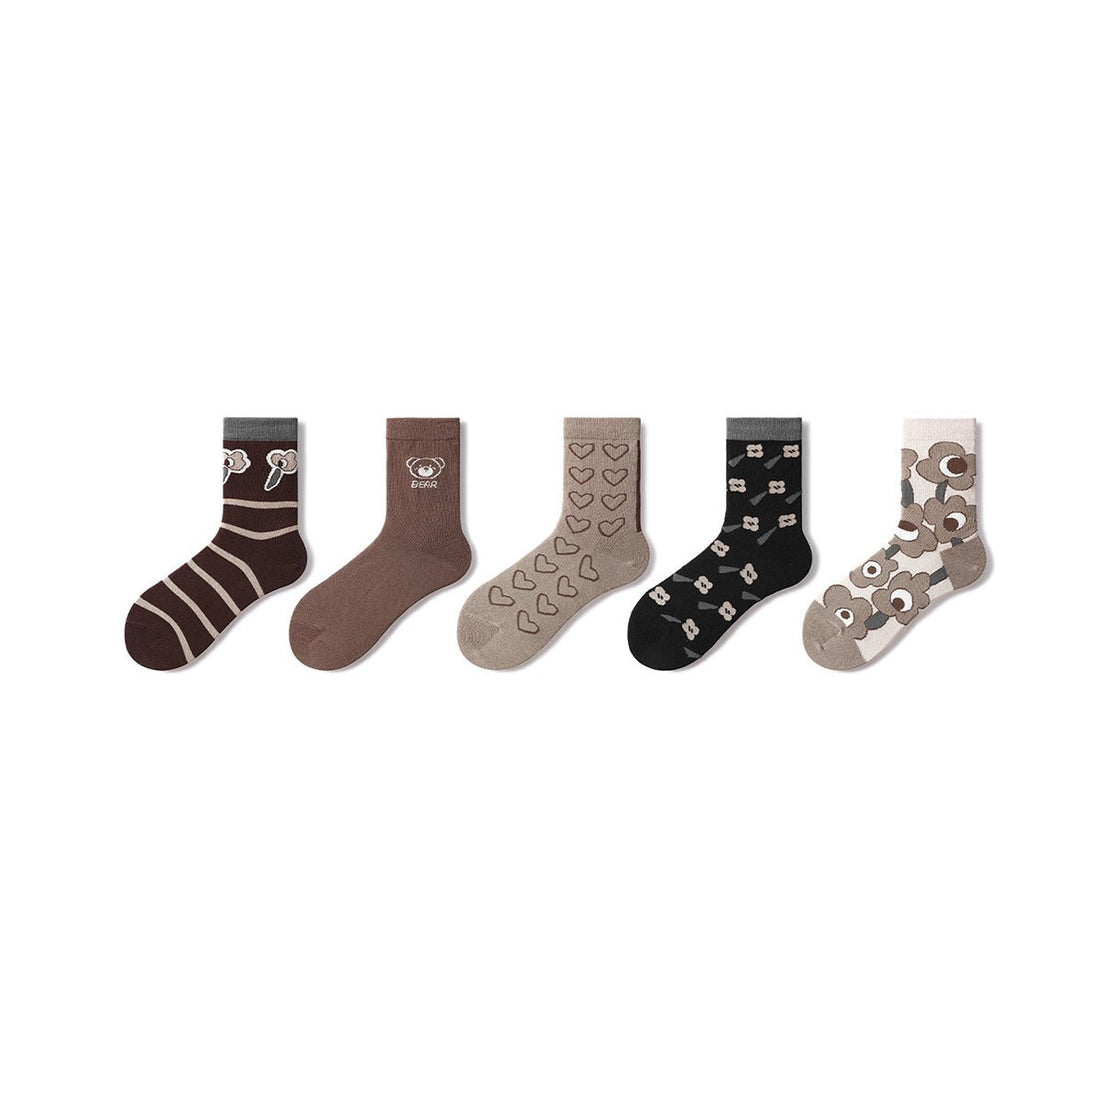 Cute Me All-season Unisex 5pcs Crew Socks Set - 0cm